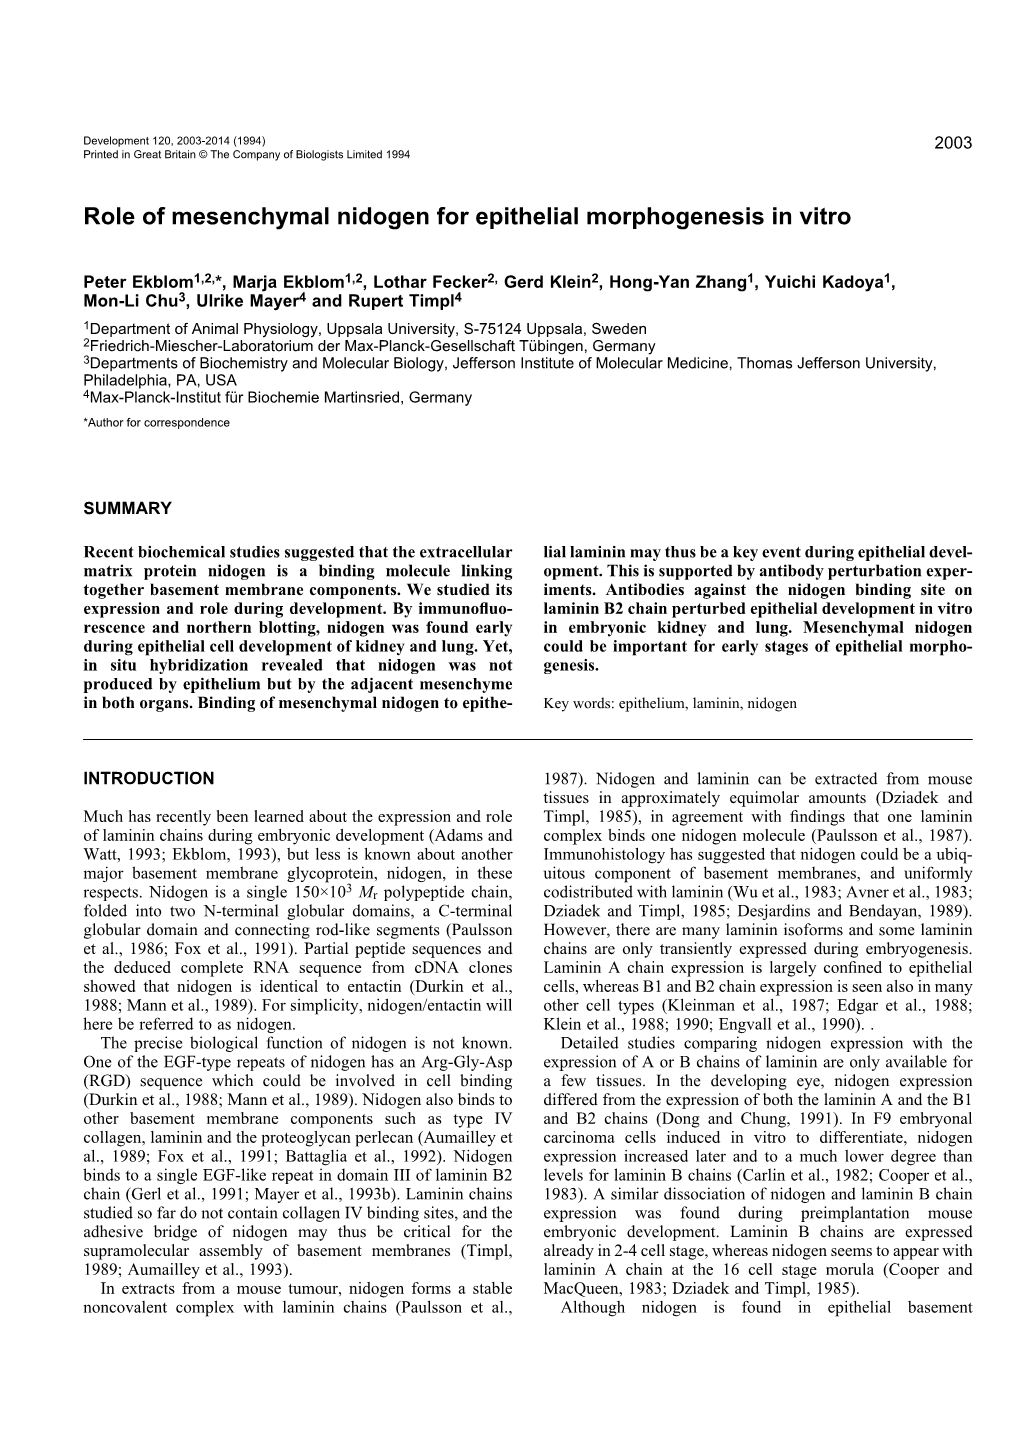 Role of Mesenchymal Nidogen for Epithelial Morphogenesis in Vitro